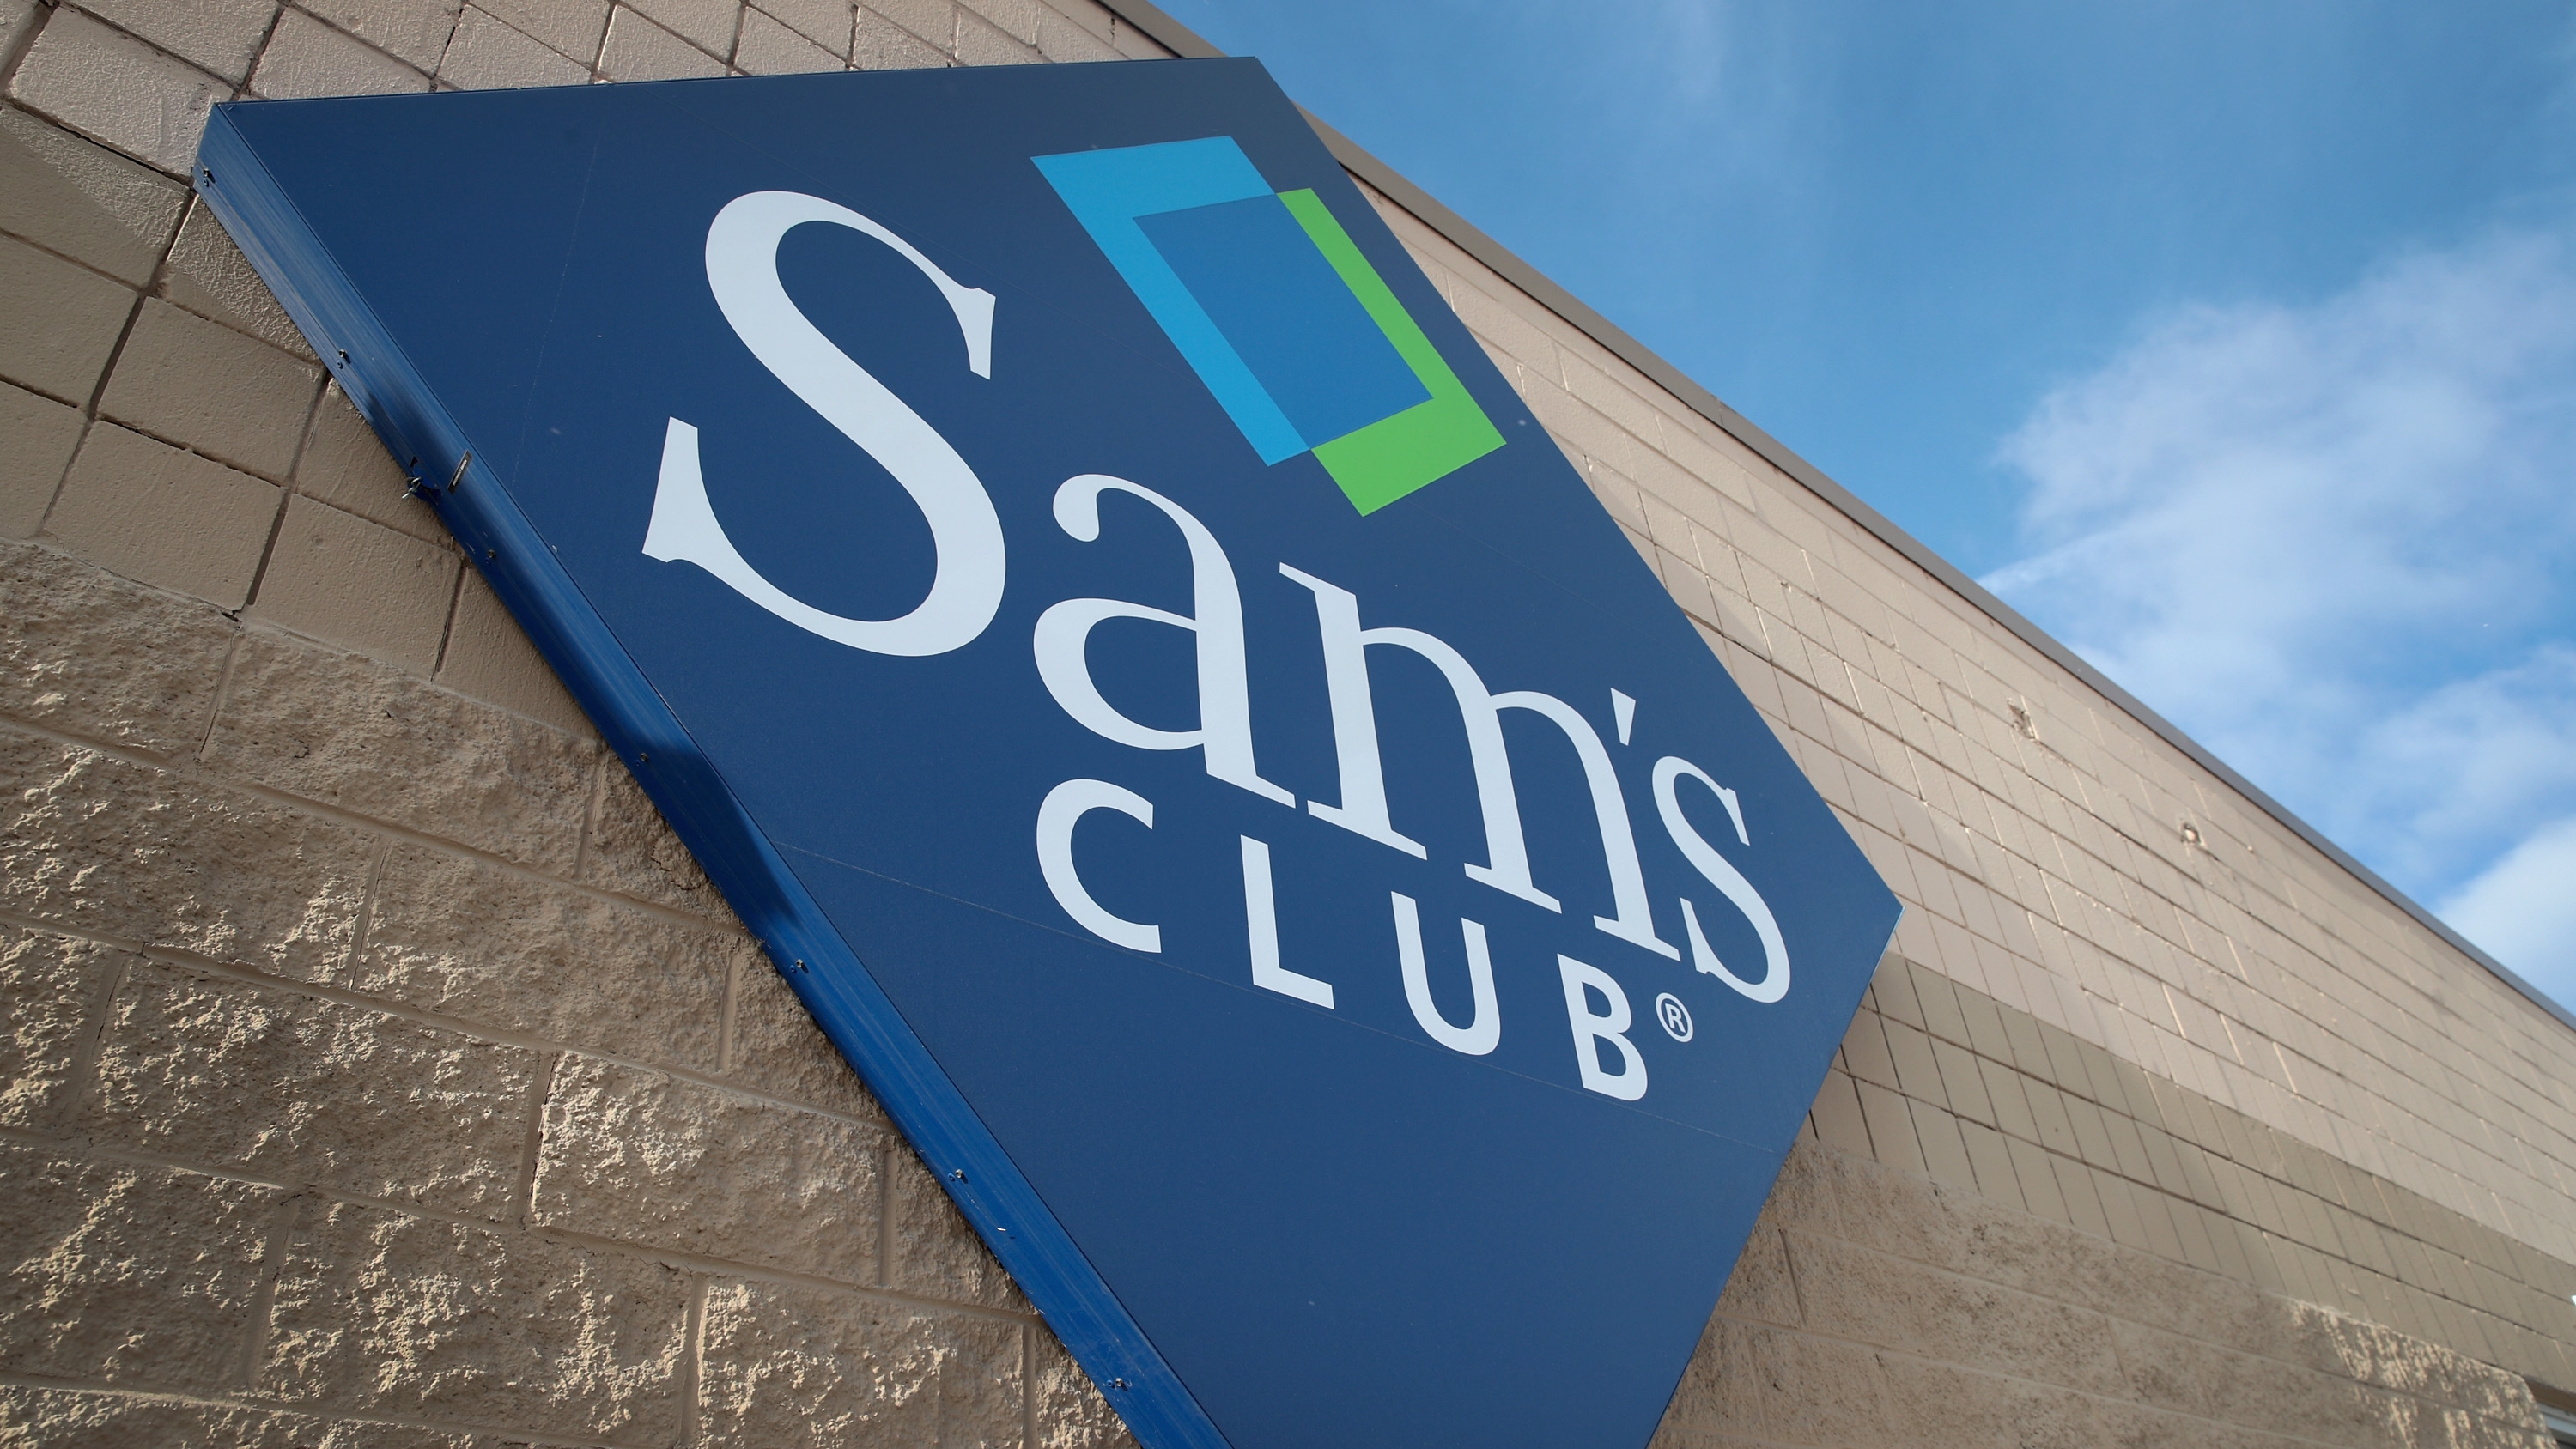 Get a 1-Year Sam's Club Membership for $10